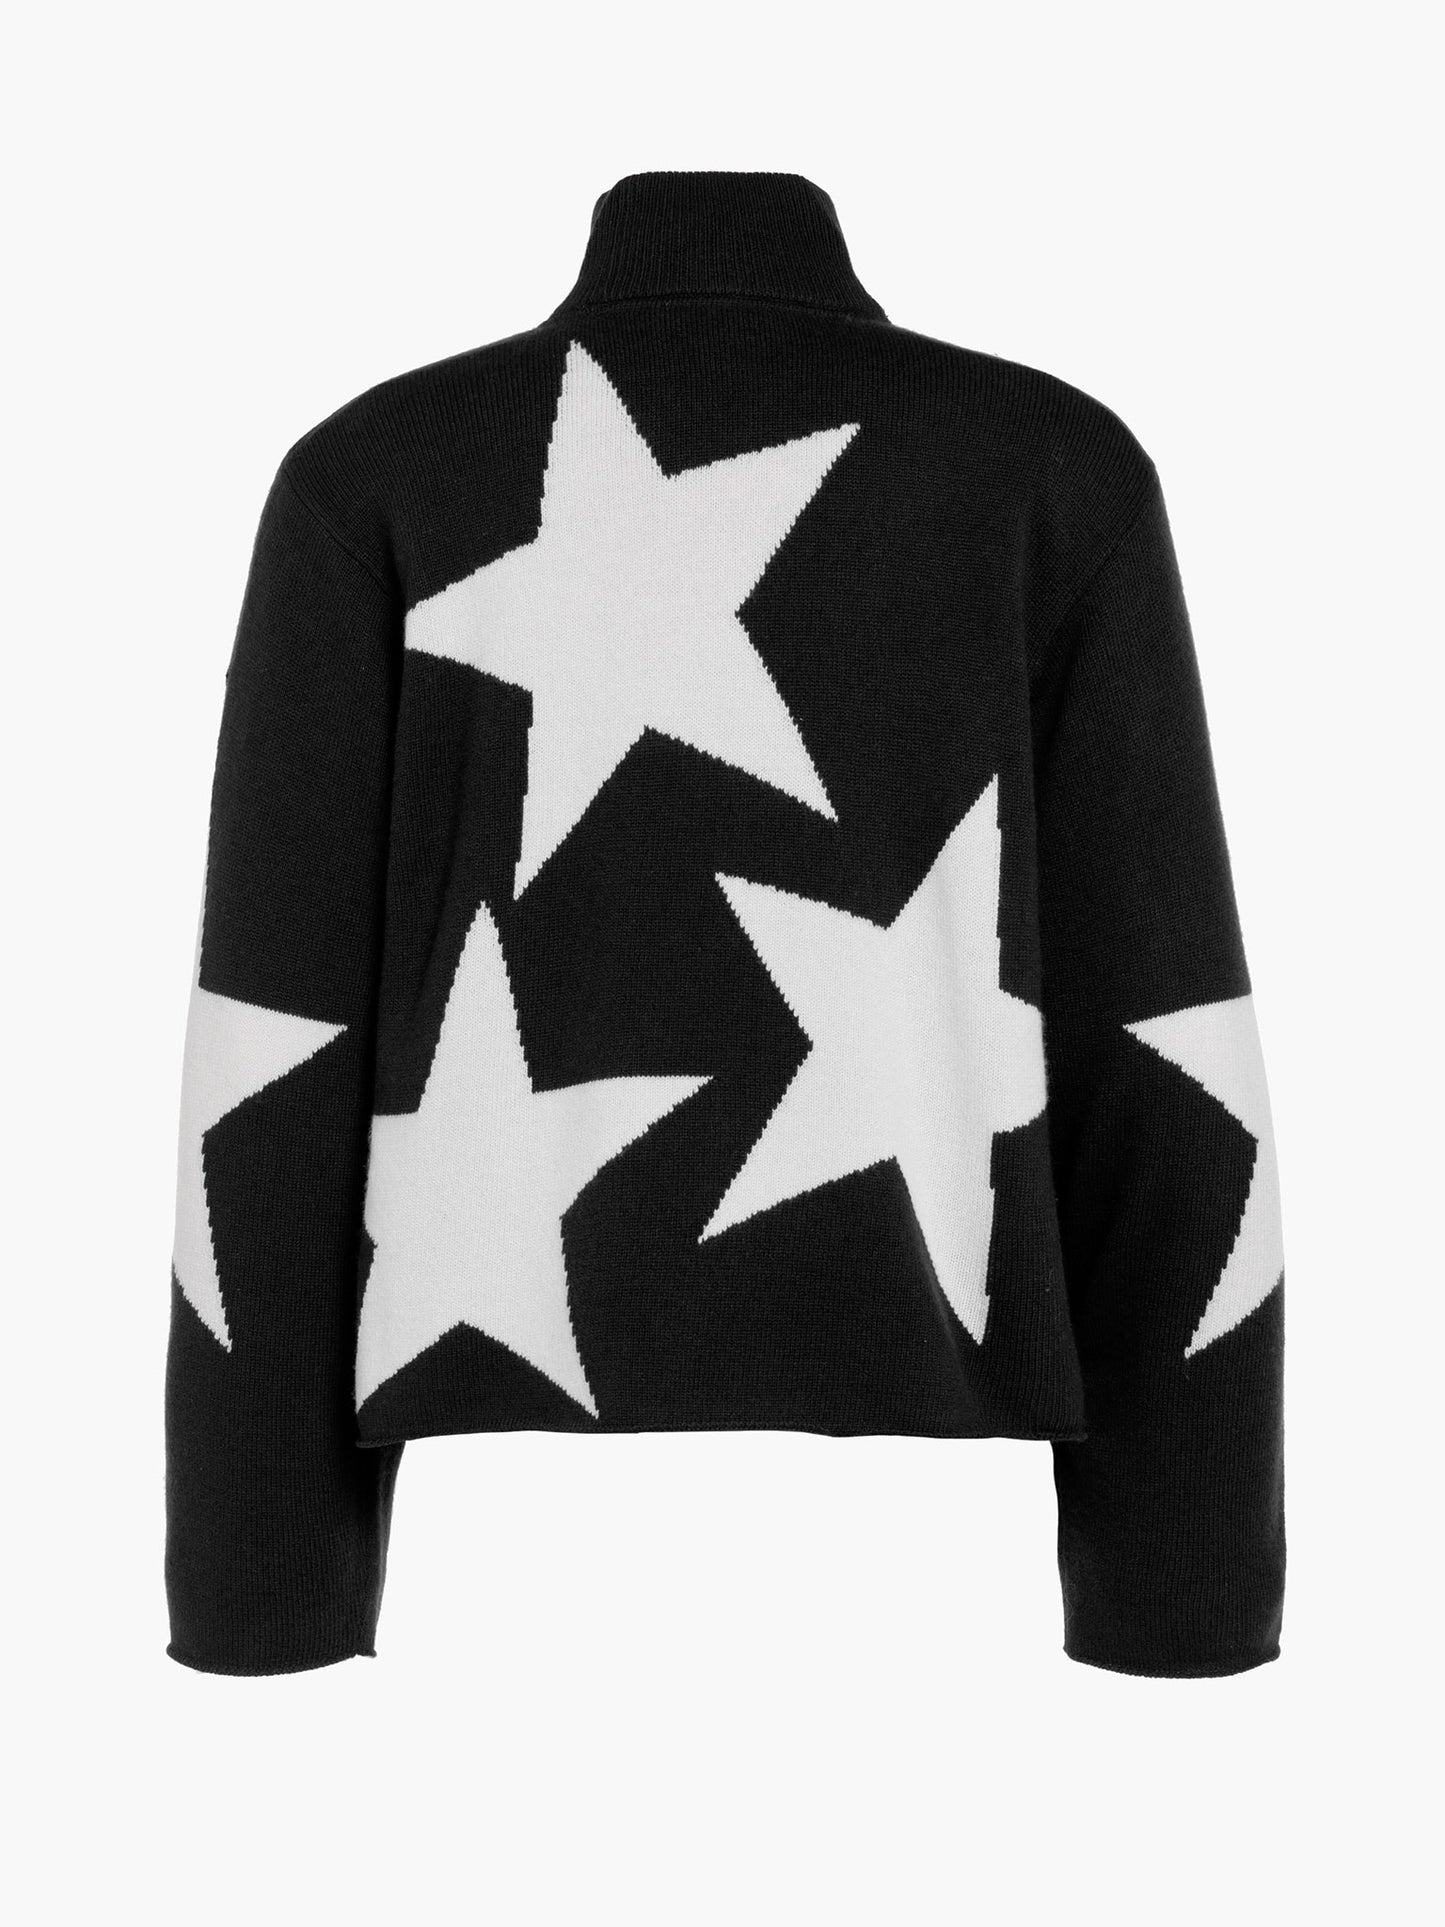 RISING STAR long sleeve knit sweater